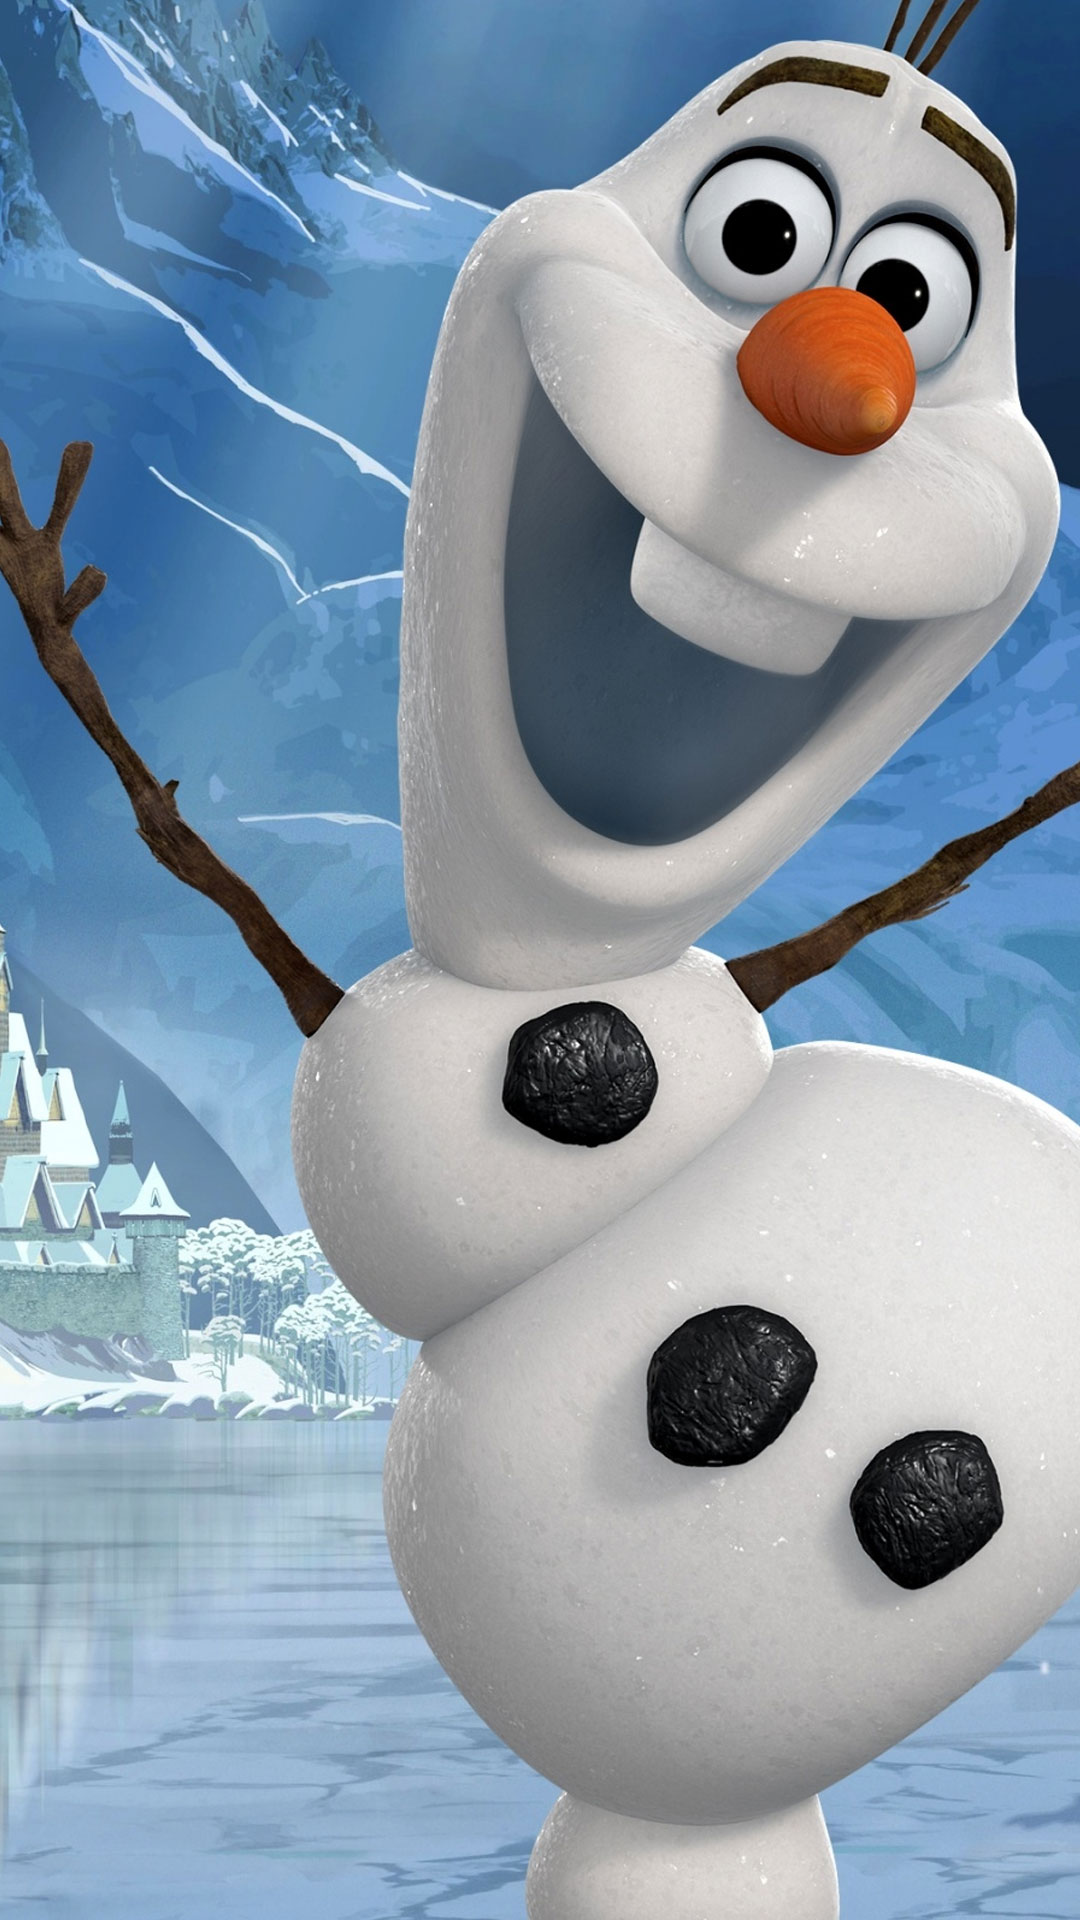 43 Disney Frozen Olaf Wallpaper On Wallpapersafari